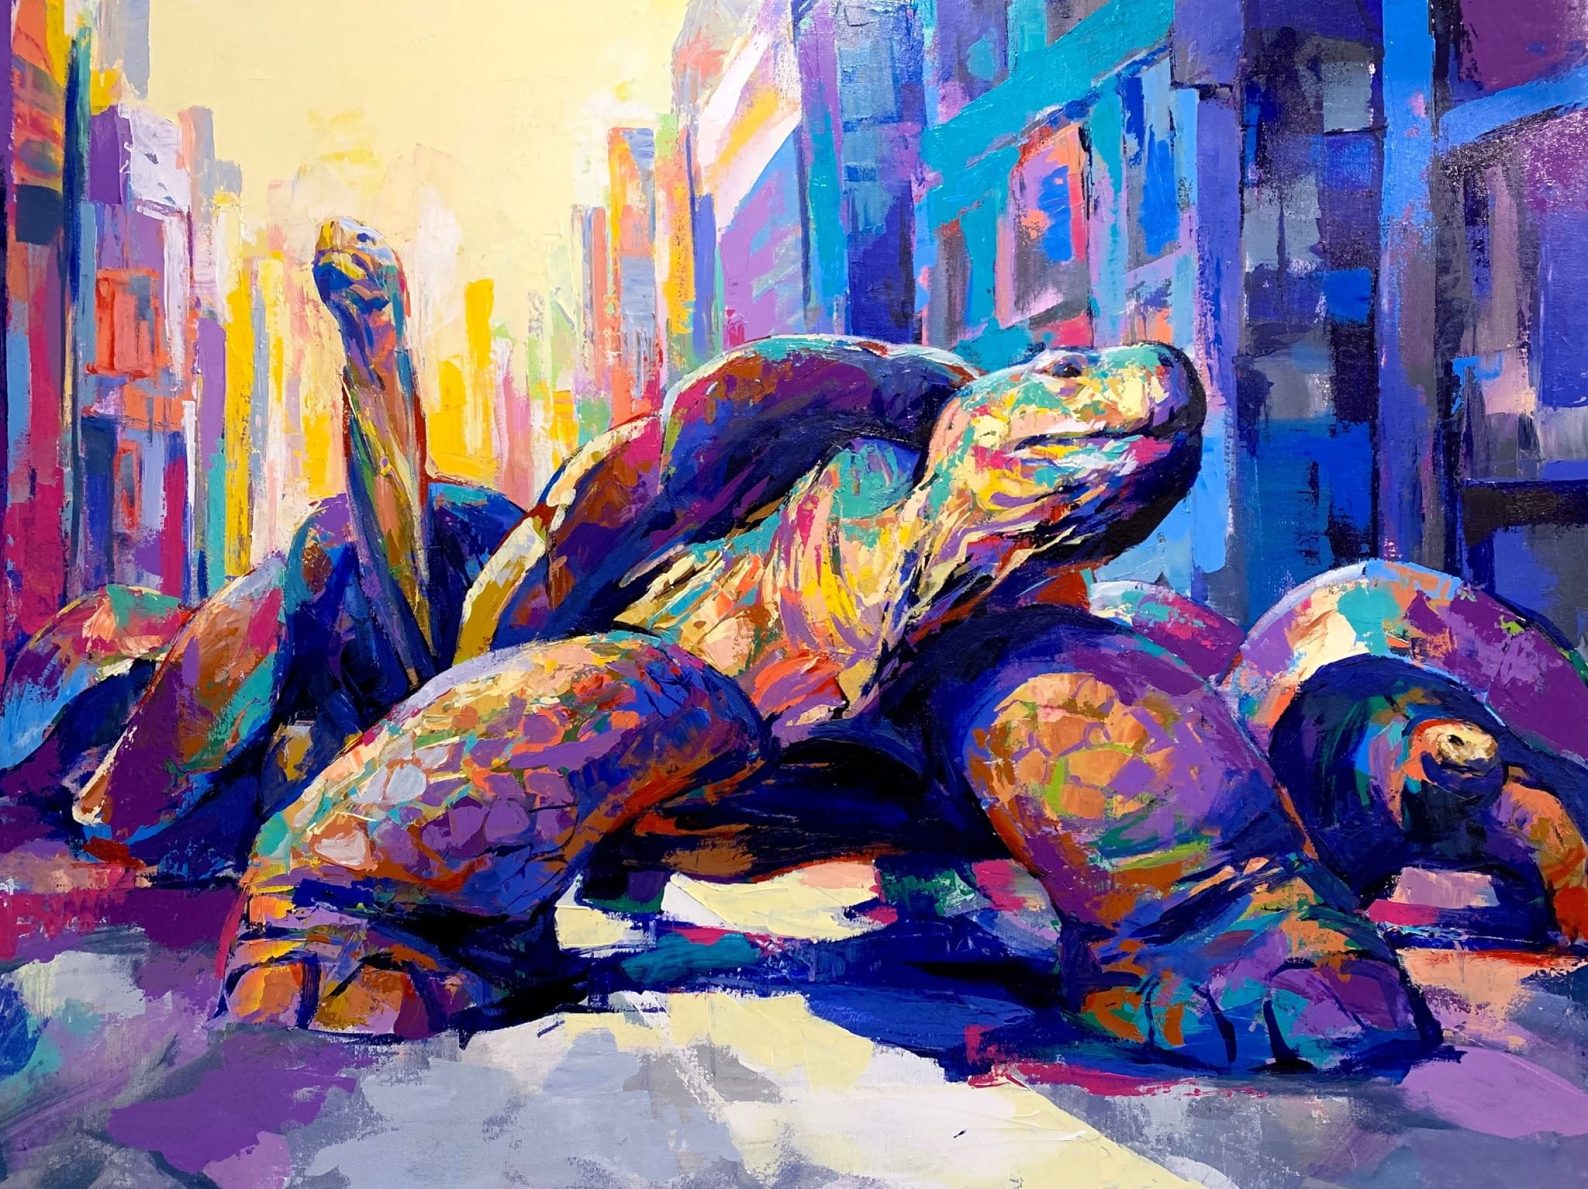 "Rush Hour" - Tortoise / Turtle - Wildlife Concrete Jungle Series Artwork